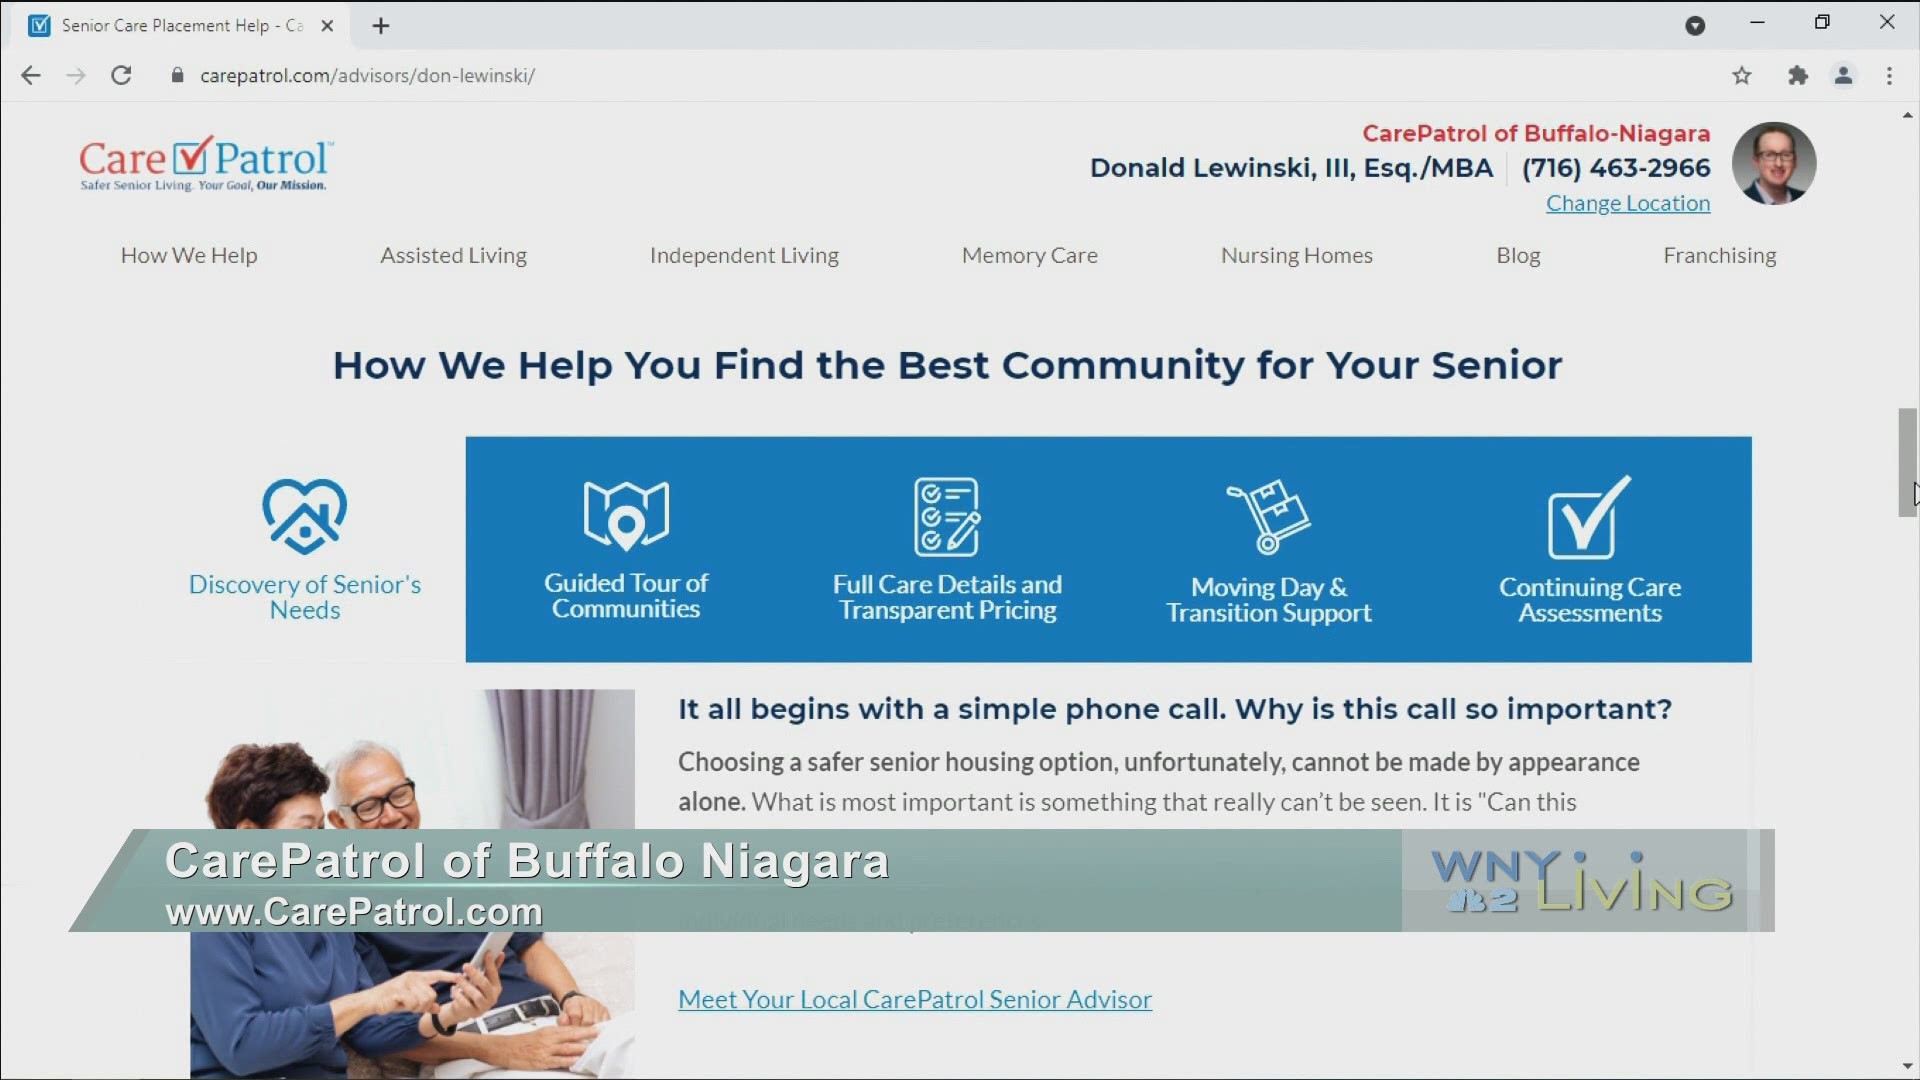 WNY Living - June 26 - CarePatrol of Buffalo Niagara (THIS VIDEO IS SPONSORED BY CAREPATROL OF BUFFALO NIAGARA)